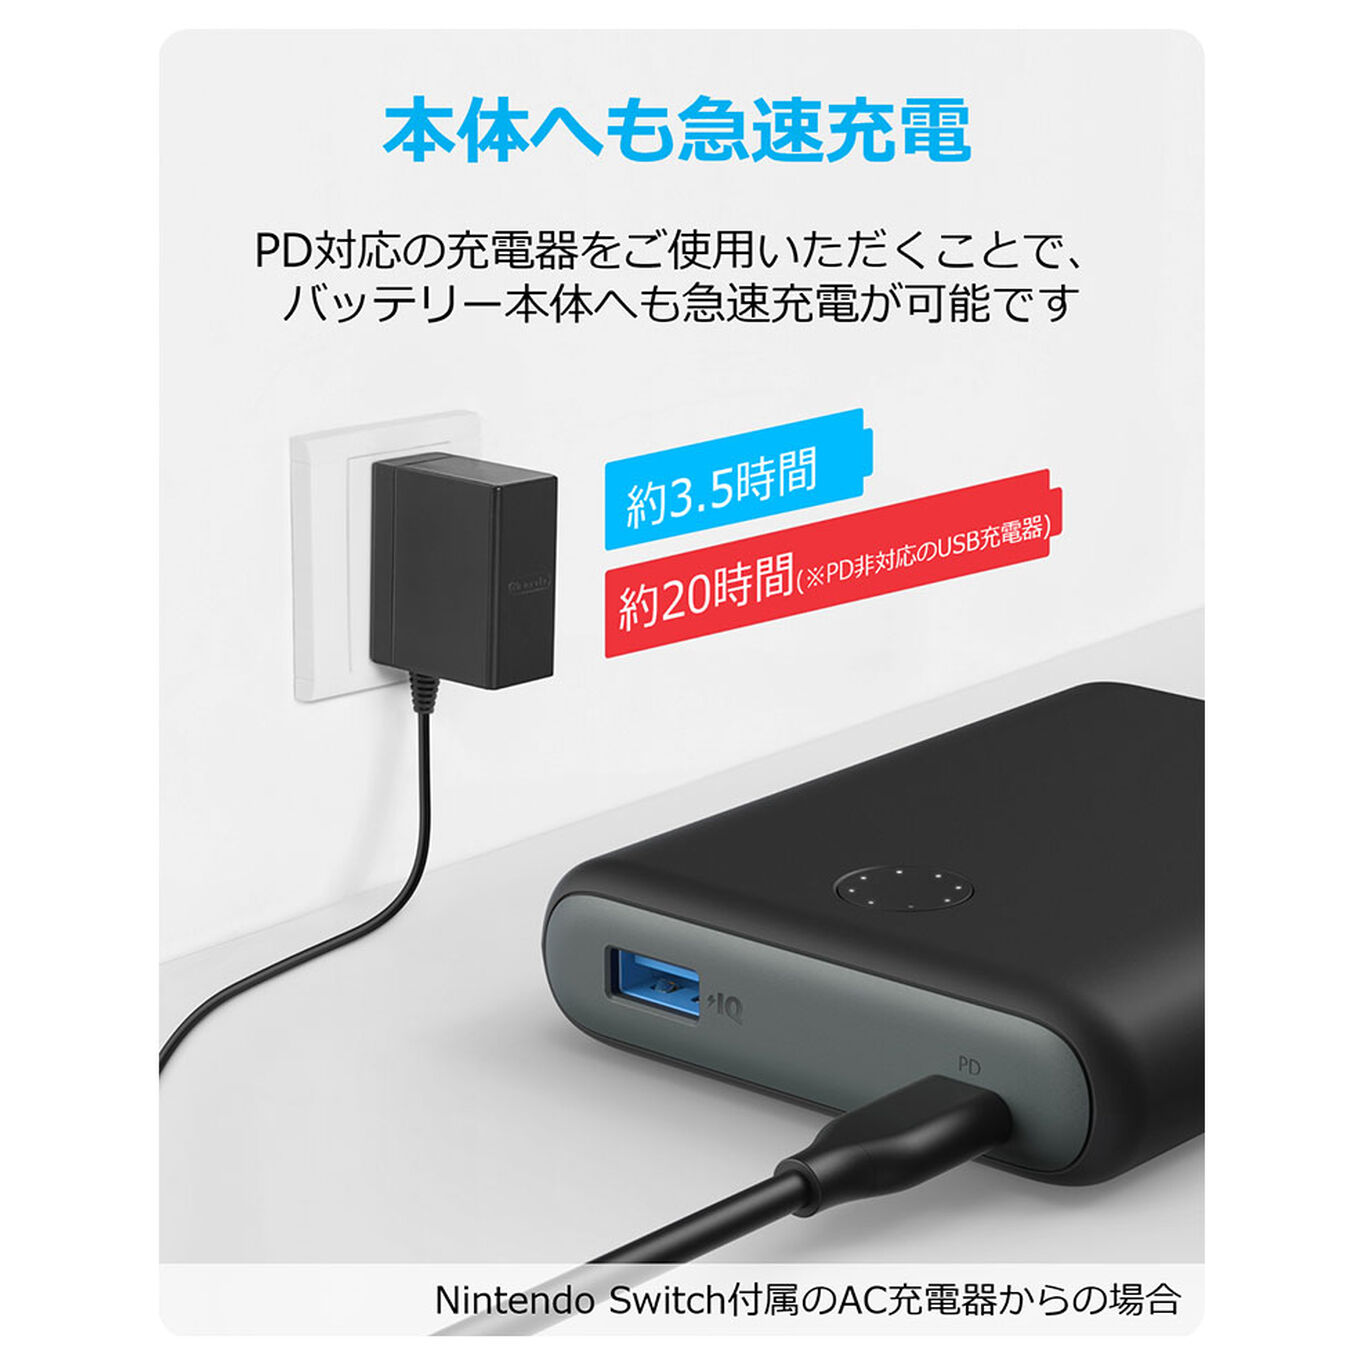 Anker Powercore Nintendo Switch Edition My Nintendo Store マイニンテンドー ストア